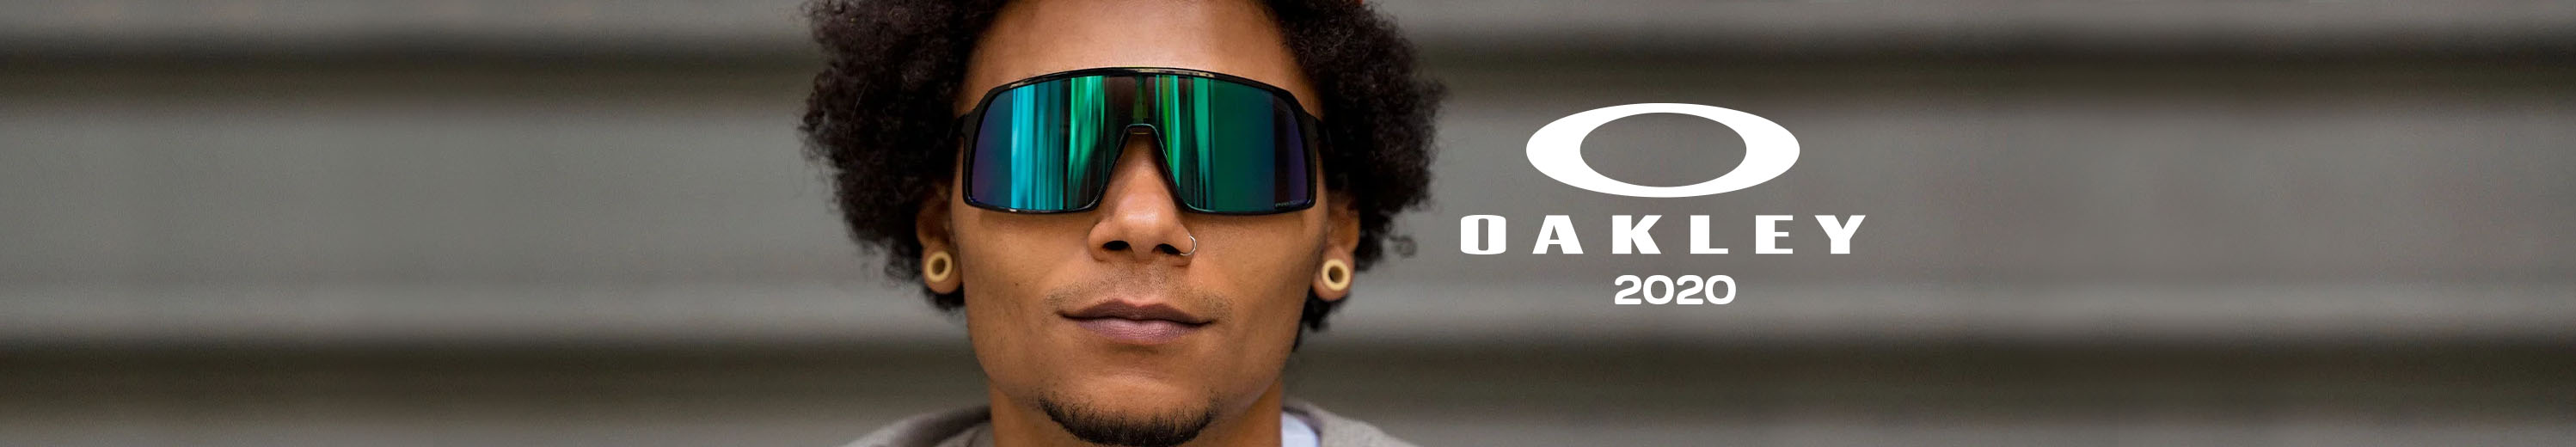 Oakley 2020 Eyewear Collection